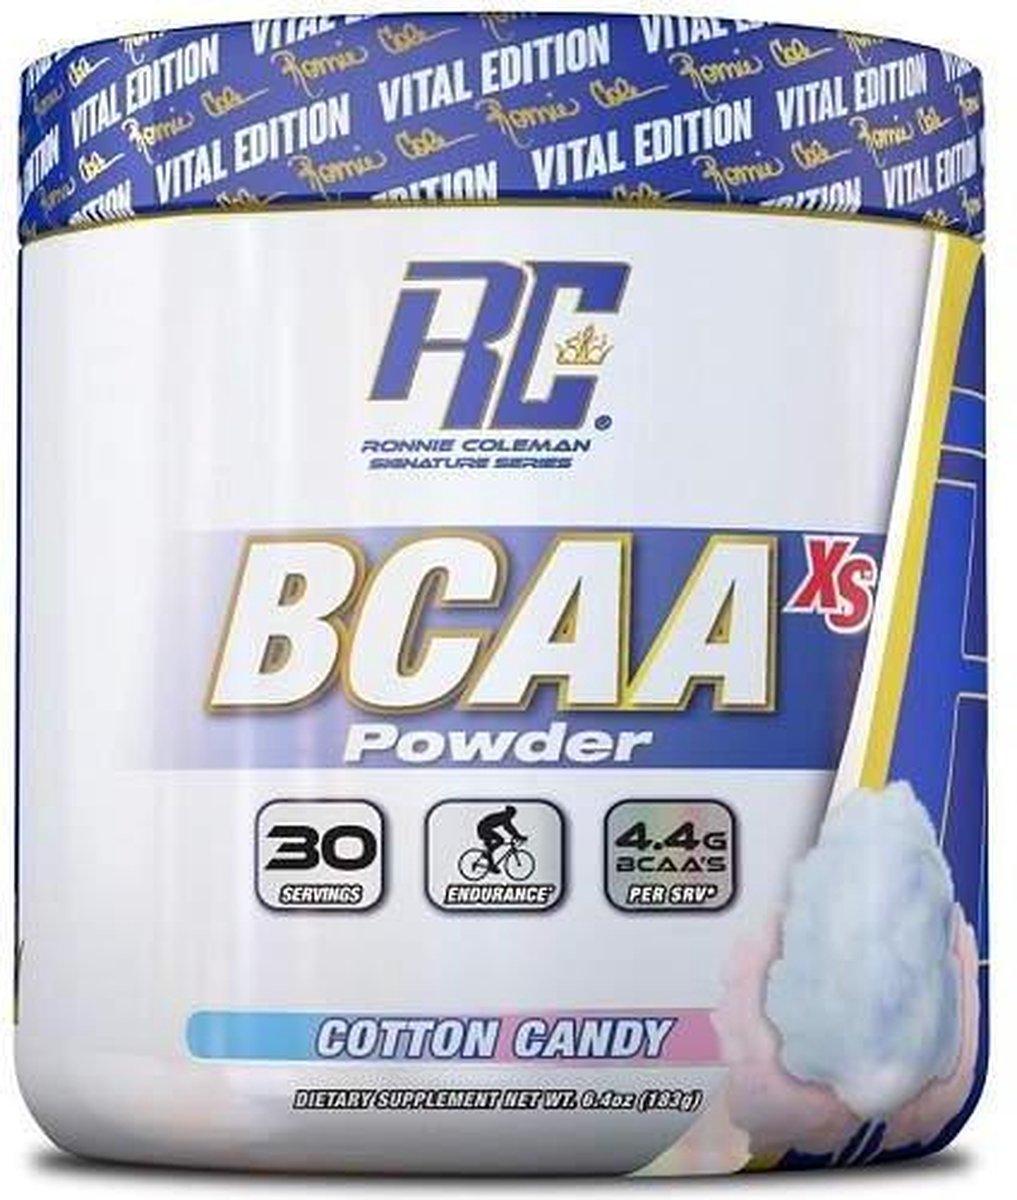 BCAA-XS Powder 30servings Cotton Candy